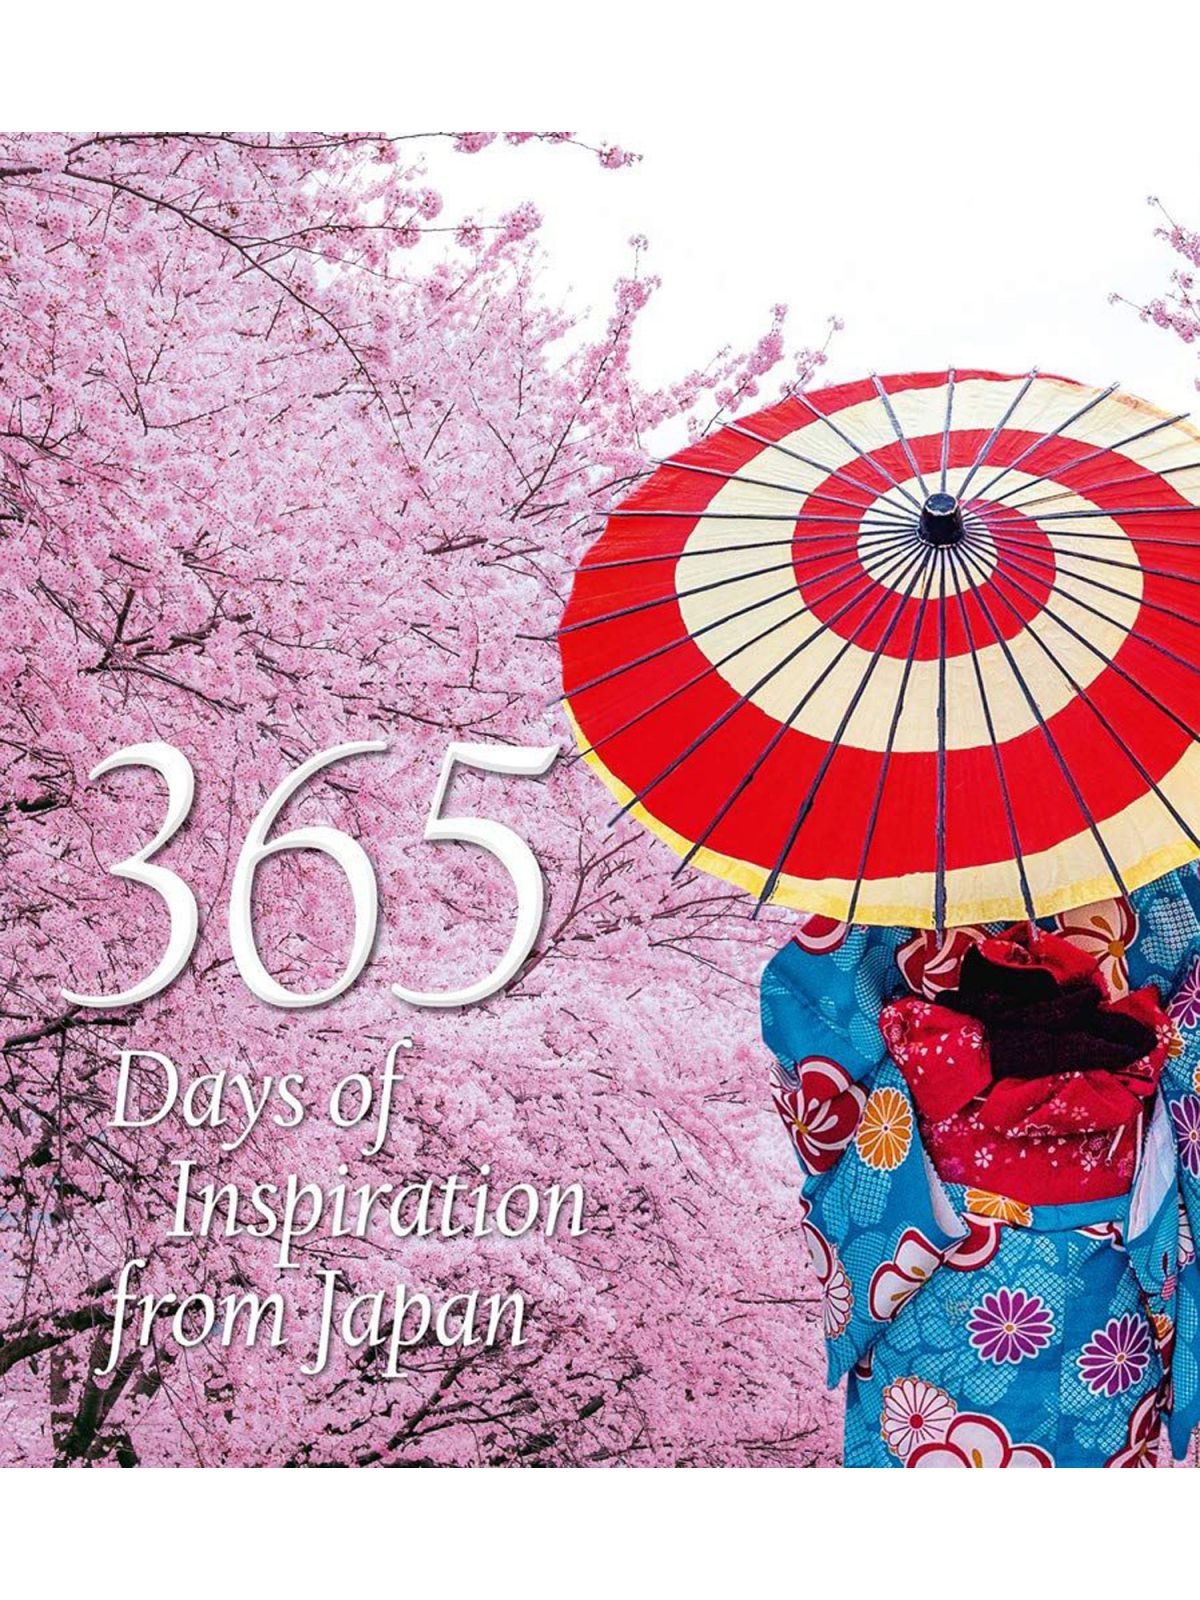 365CUBE BK DAYS OF HARMONY & WISDOM FROM JAPAN  Купить Книгу на Английском